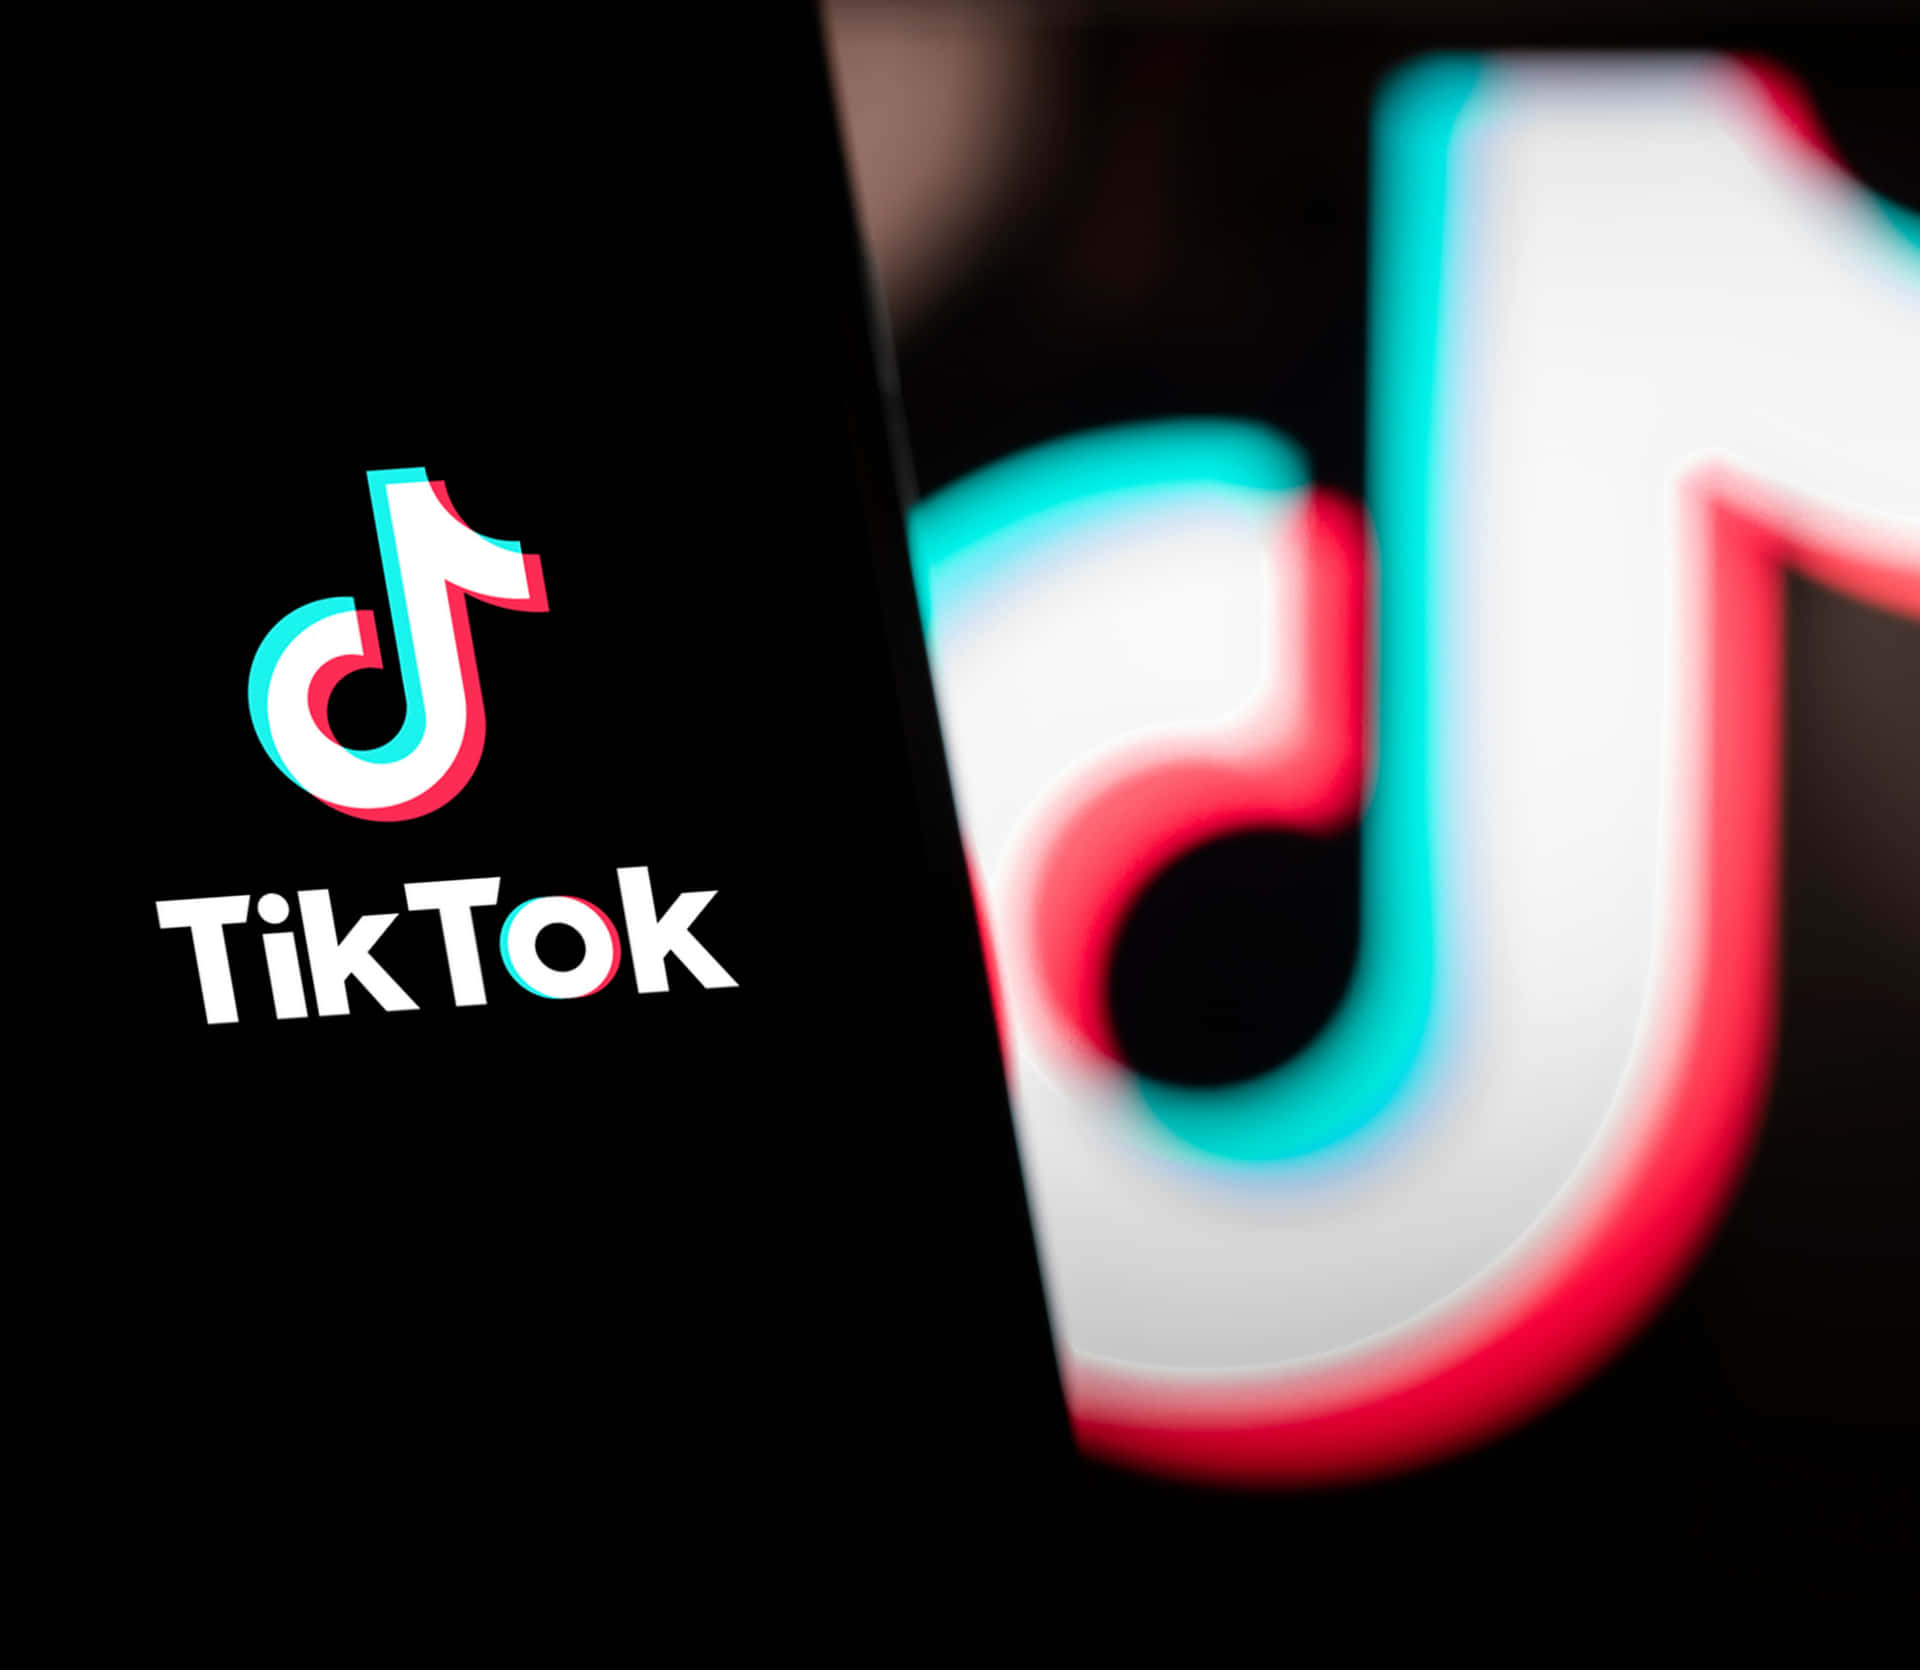 Tiktok Logo With A Black Background